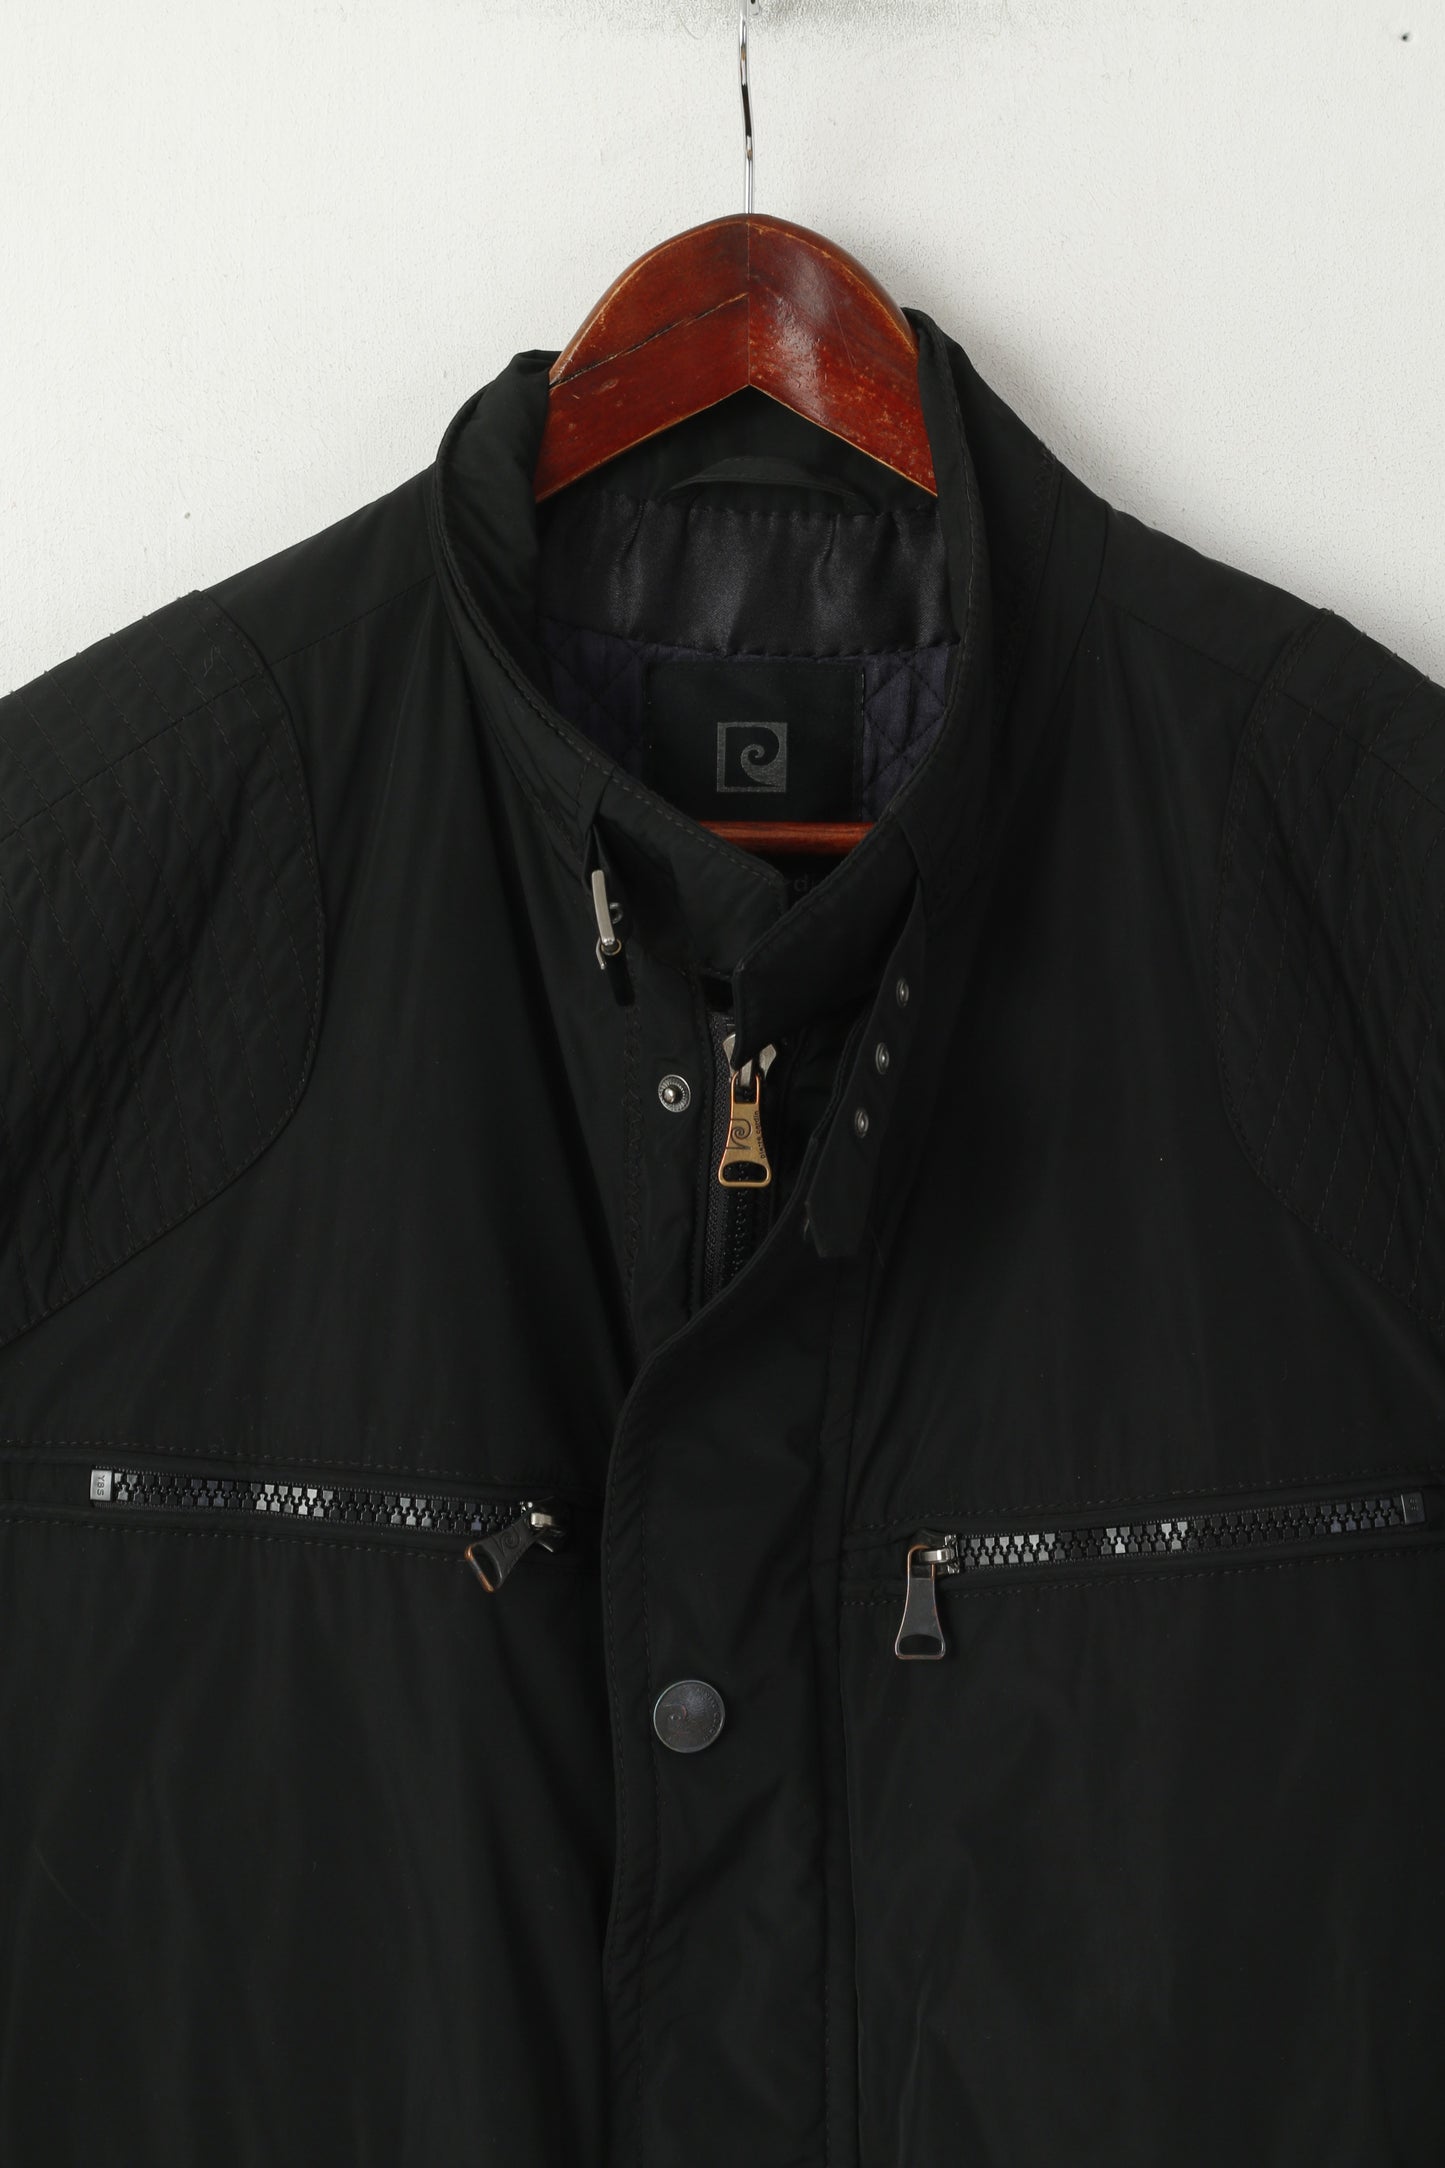 Pierre Cardin Paris Men 56 XL Jacket Black Casual Heritage Detailed Buttons Zip Top Top